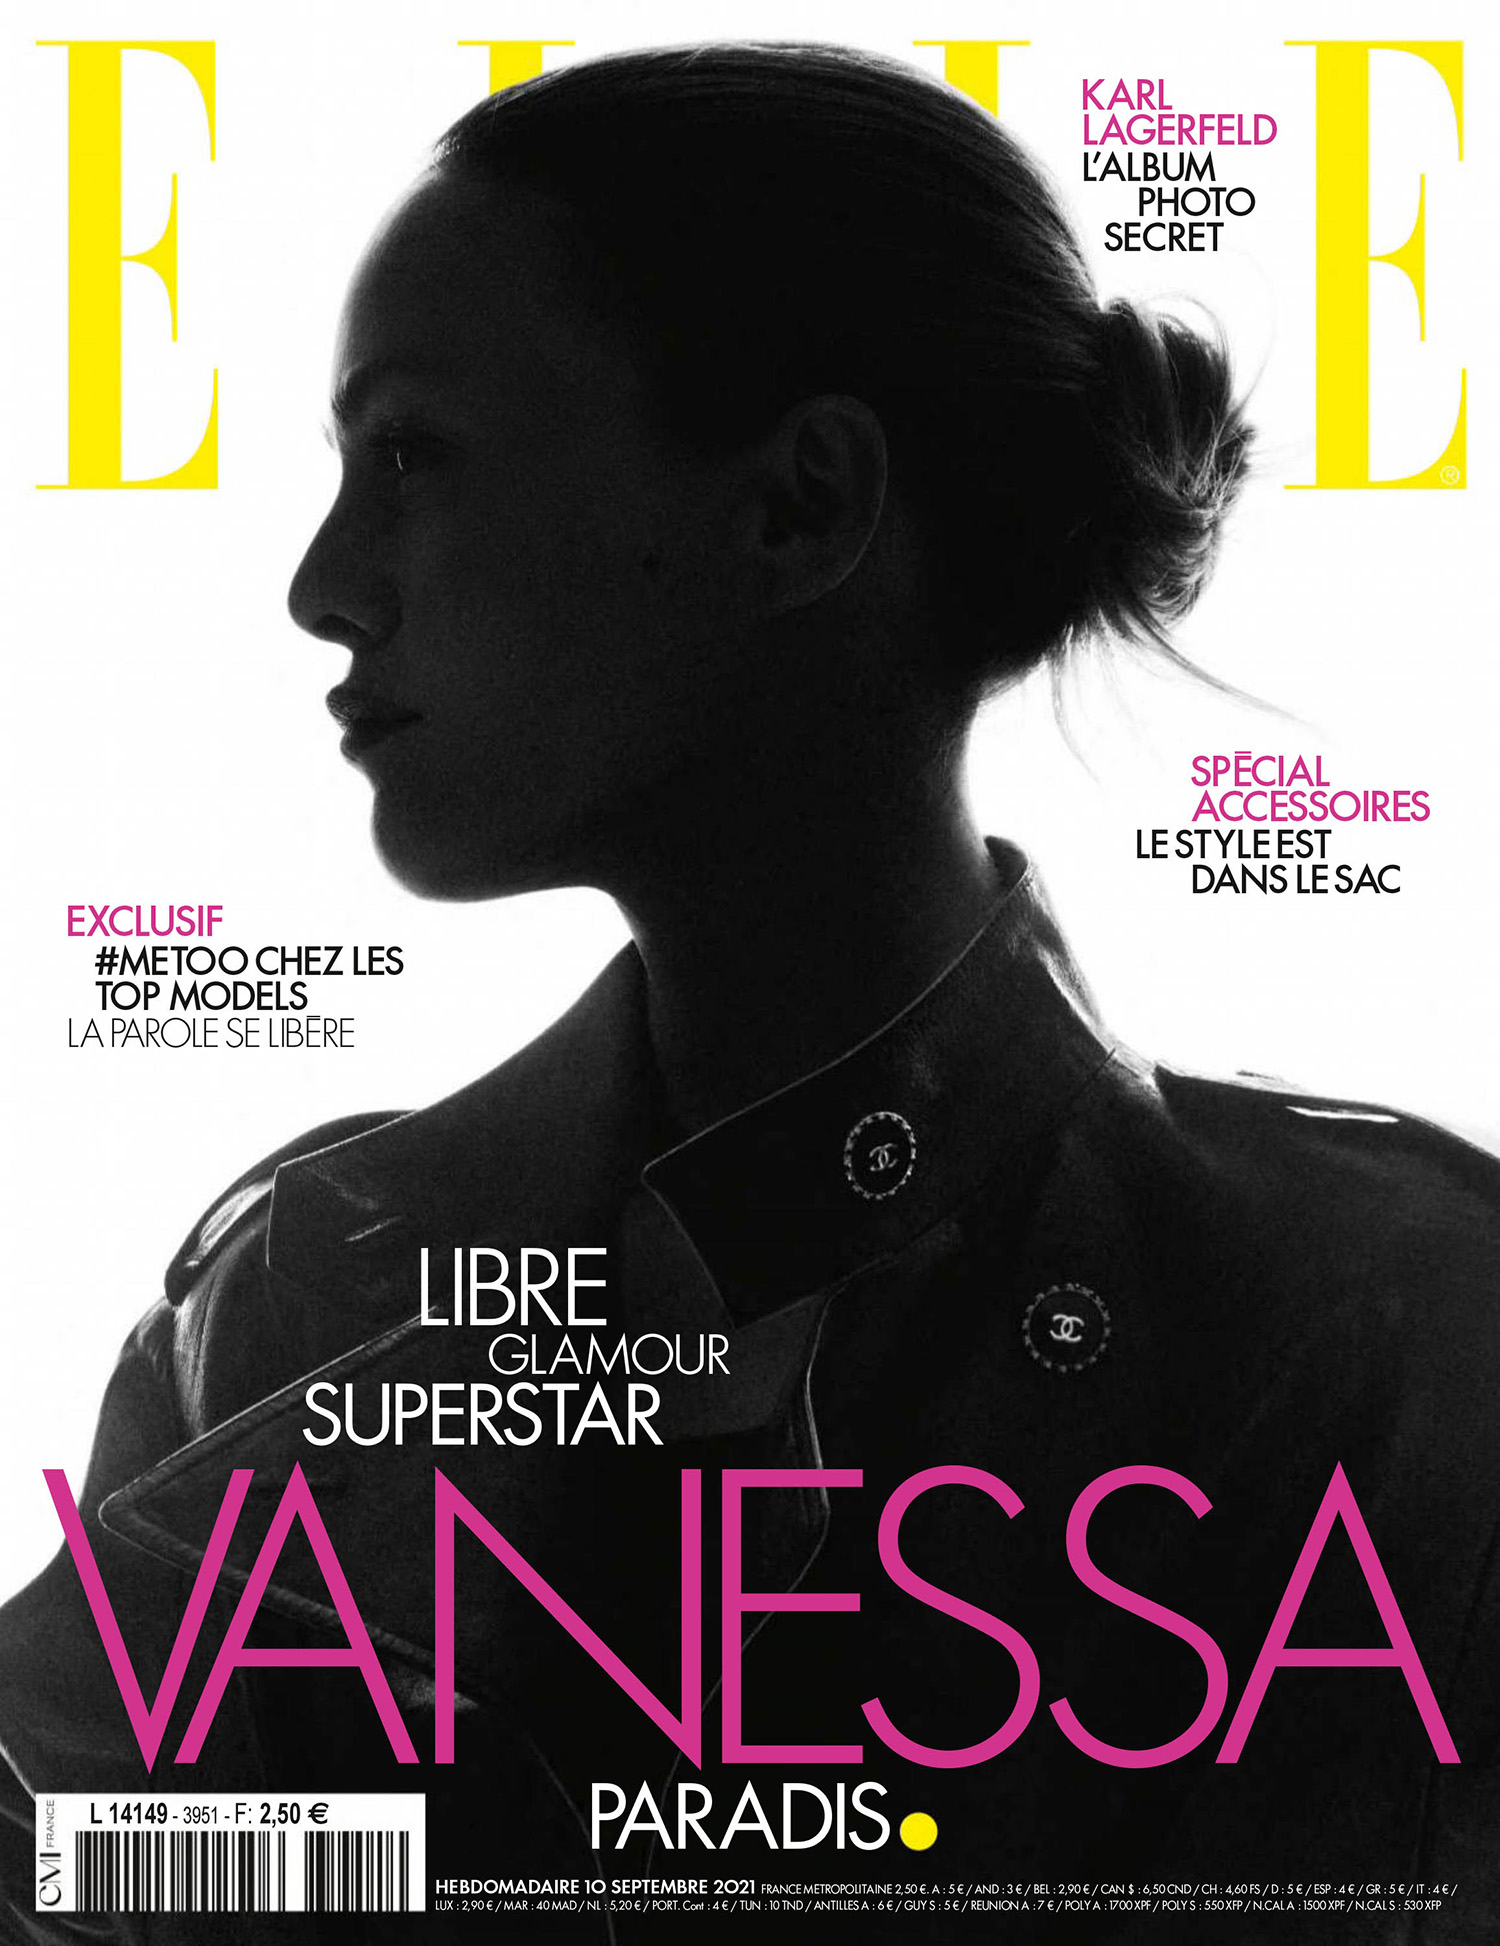 Vanessa Paradis covers Elle France September 10th, 2021 by Karim